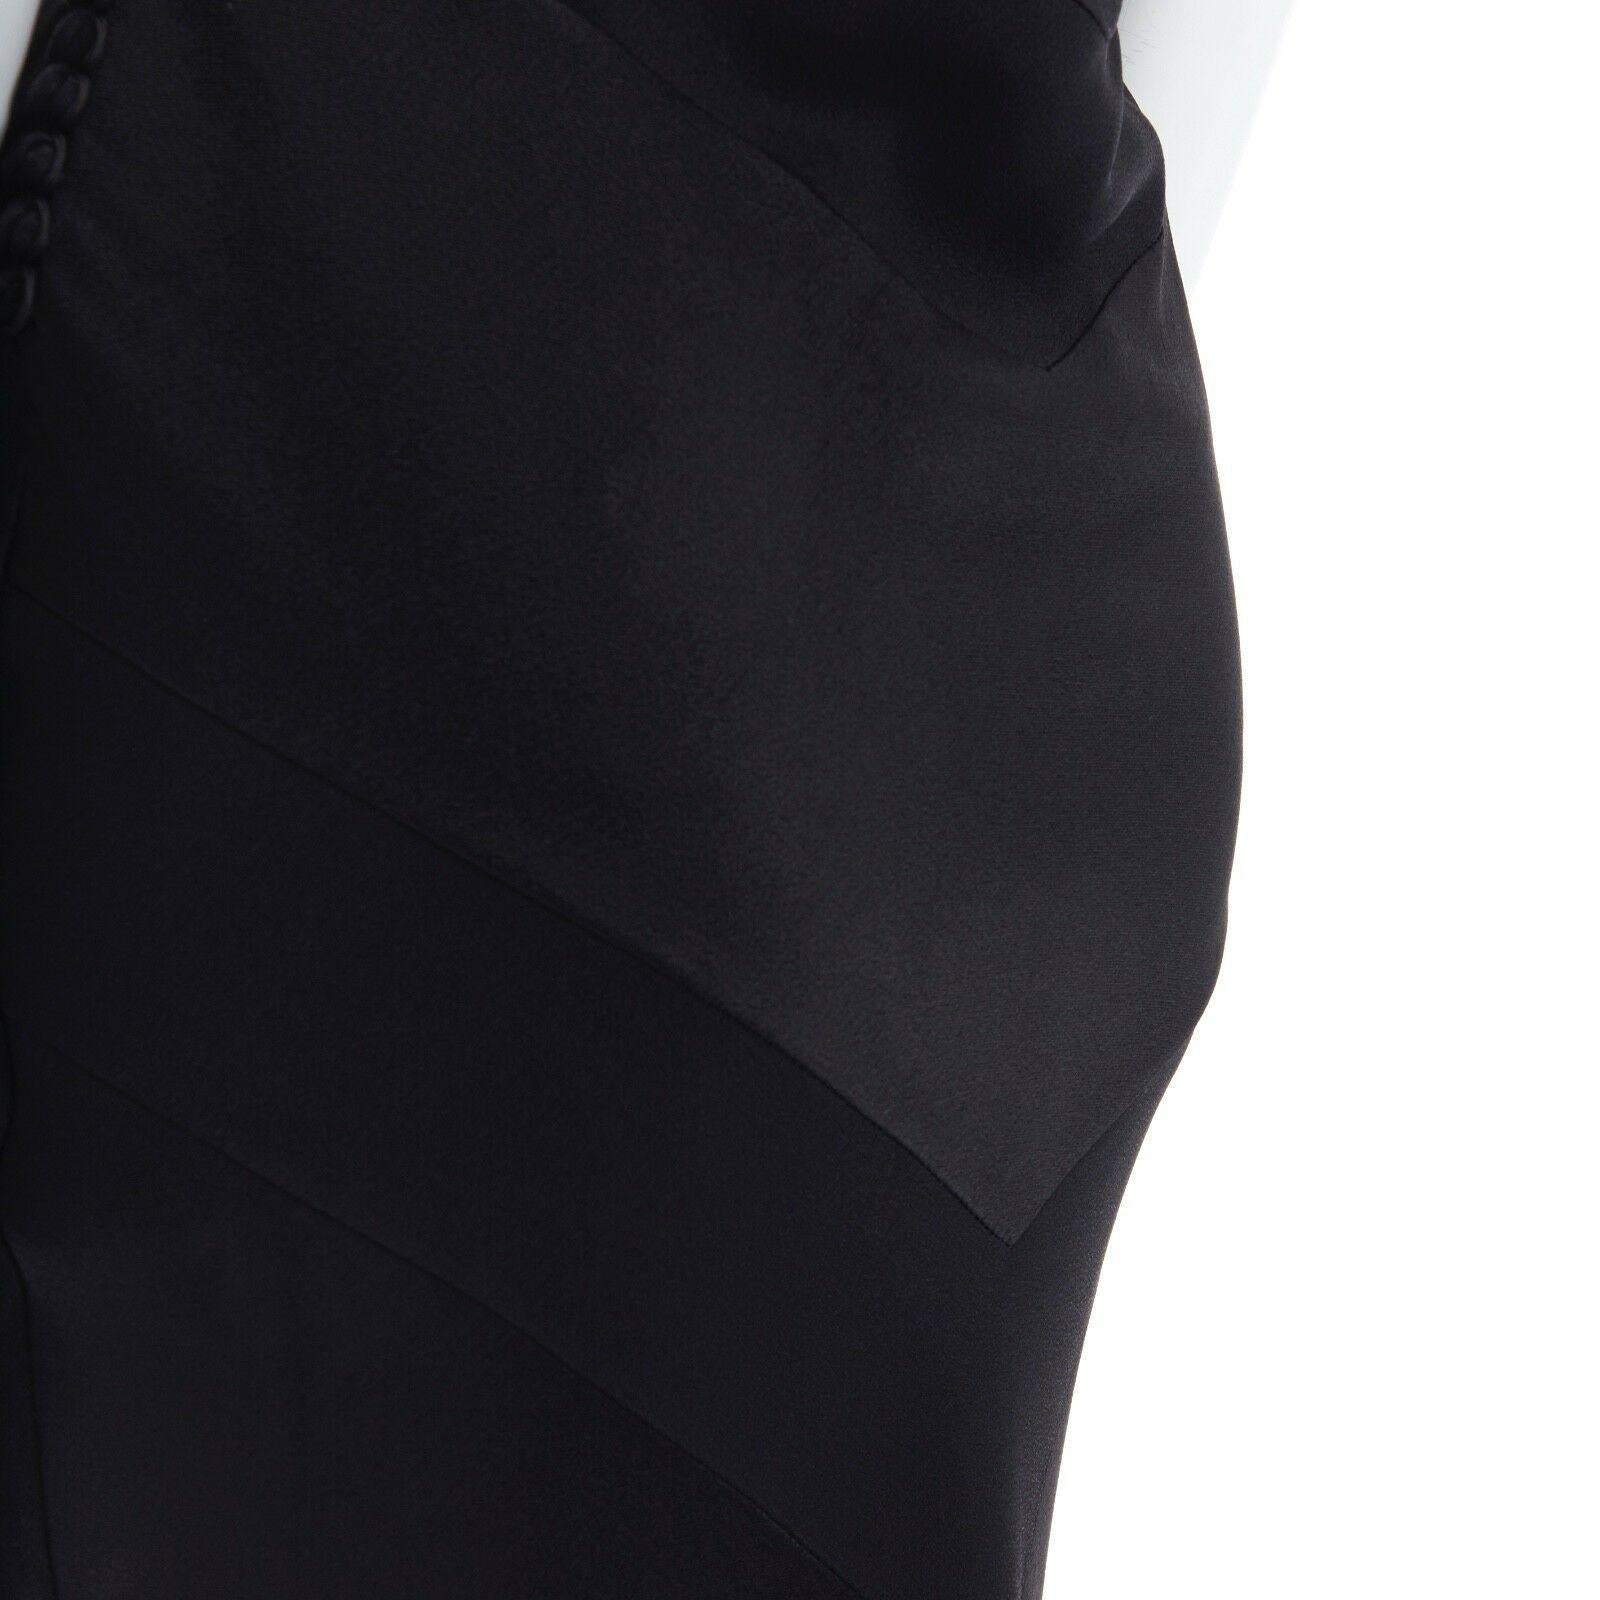 CHRISTIAN DIOR GALLIANO black halter keyhole backless dress gown FR40 US8 UK12 L 4